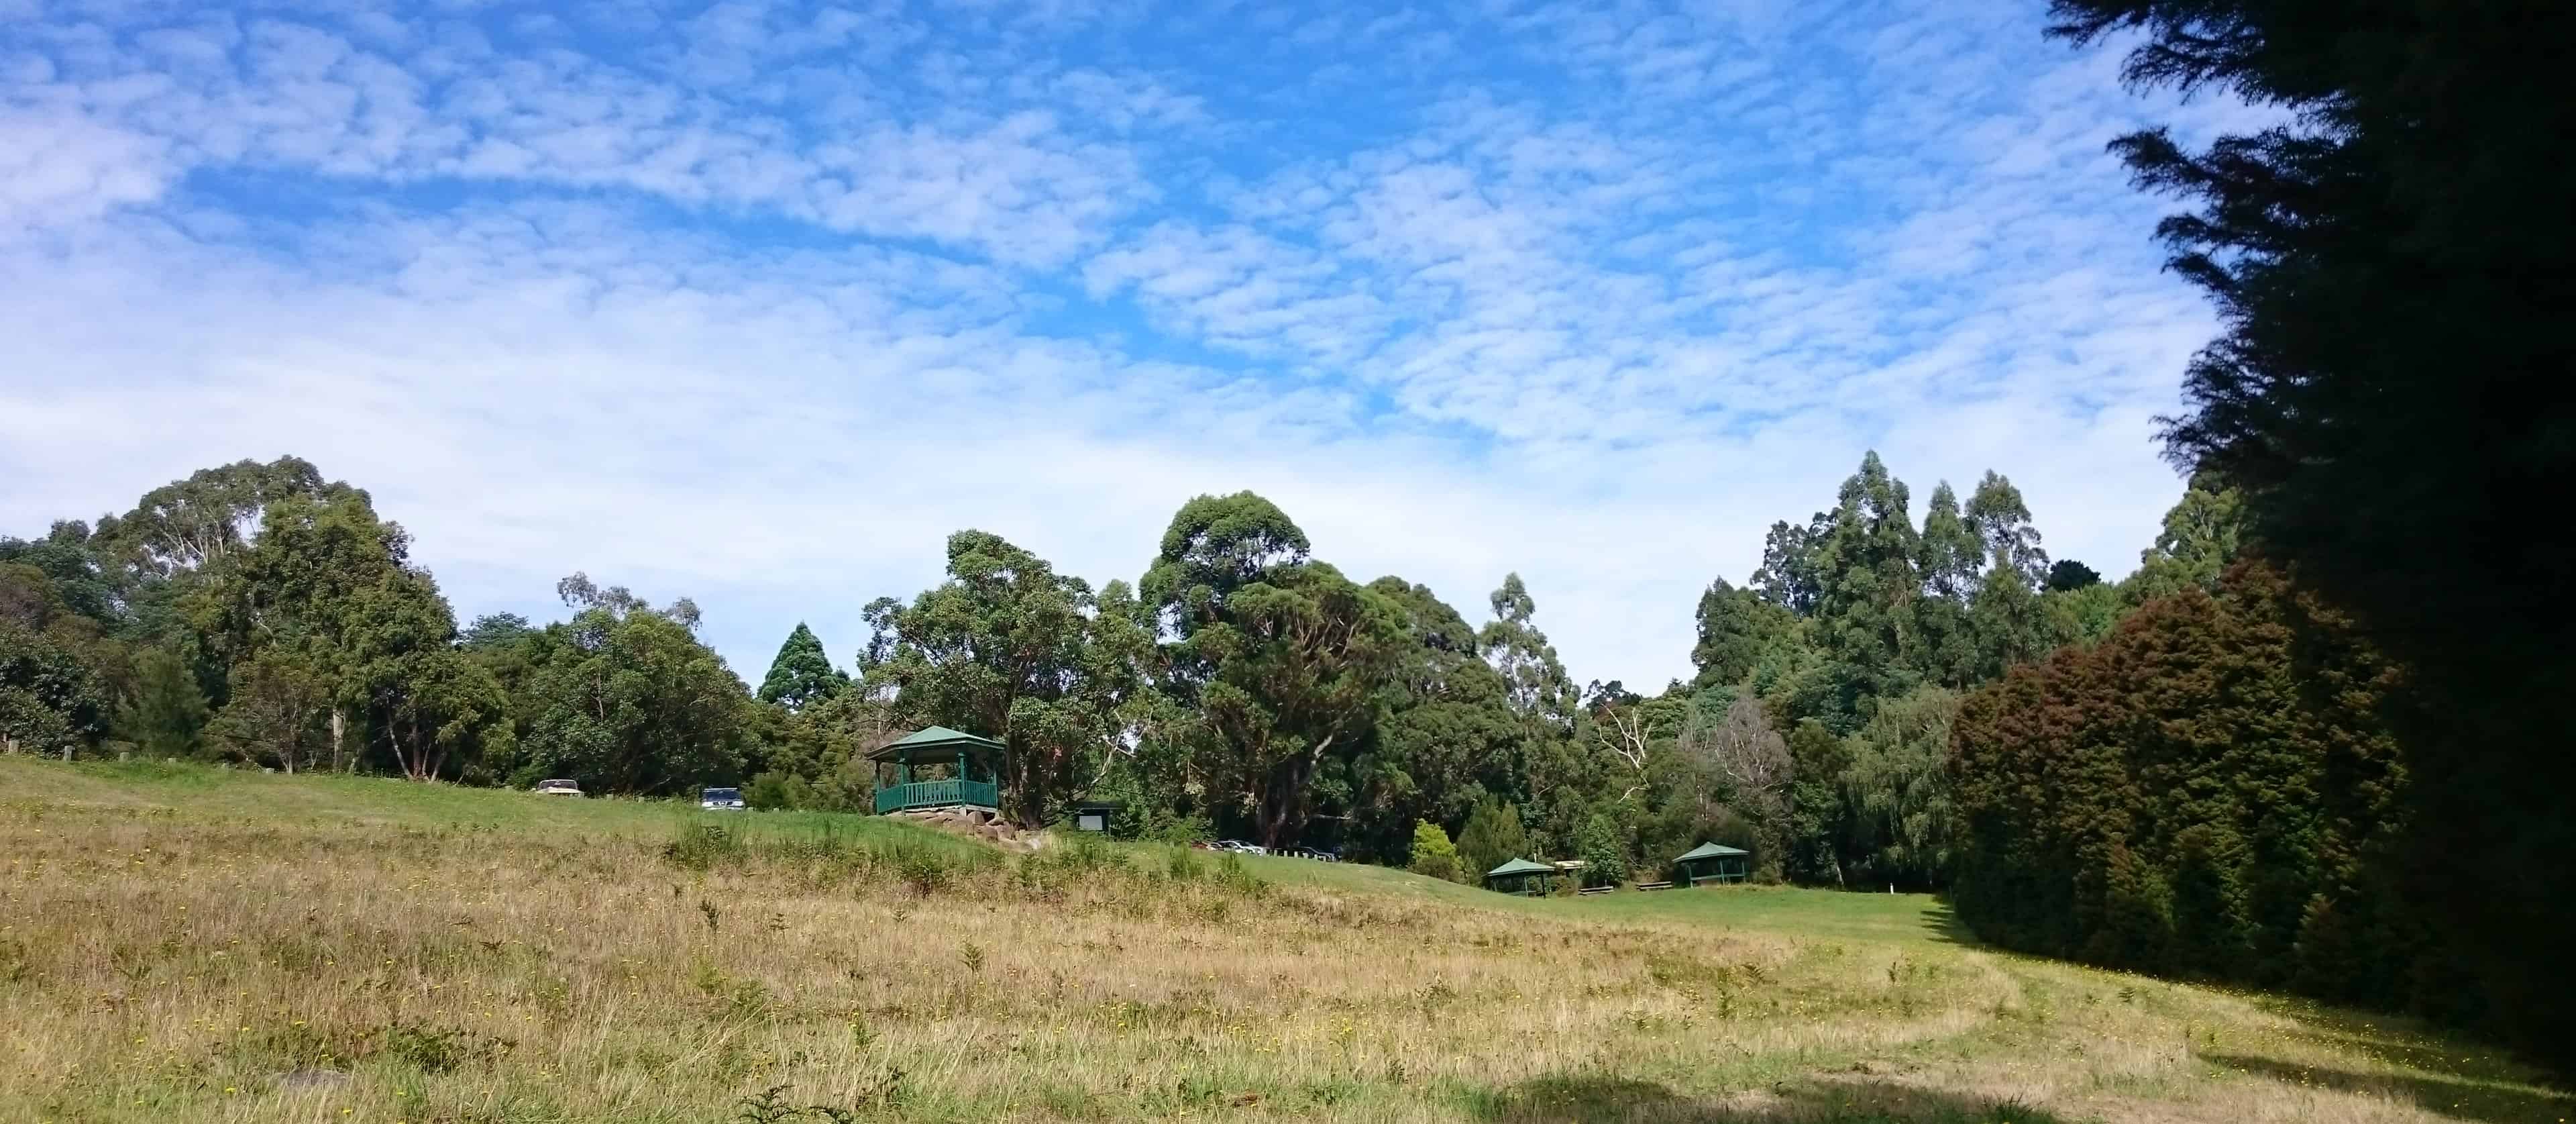 Hamer Arboretum Mount Dandenong Australia